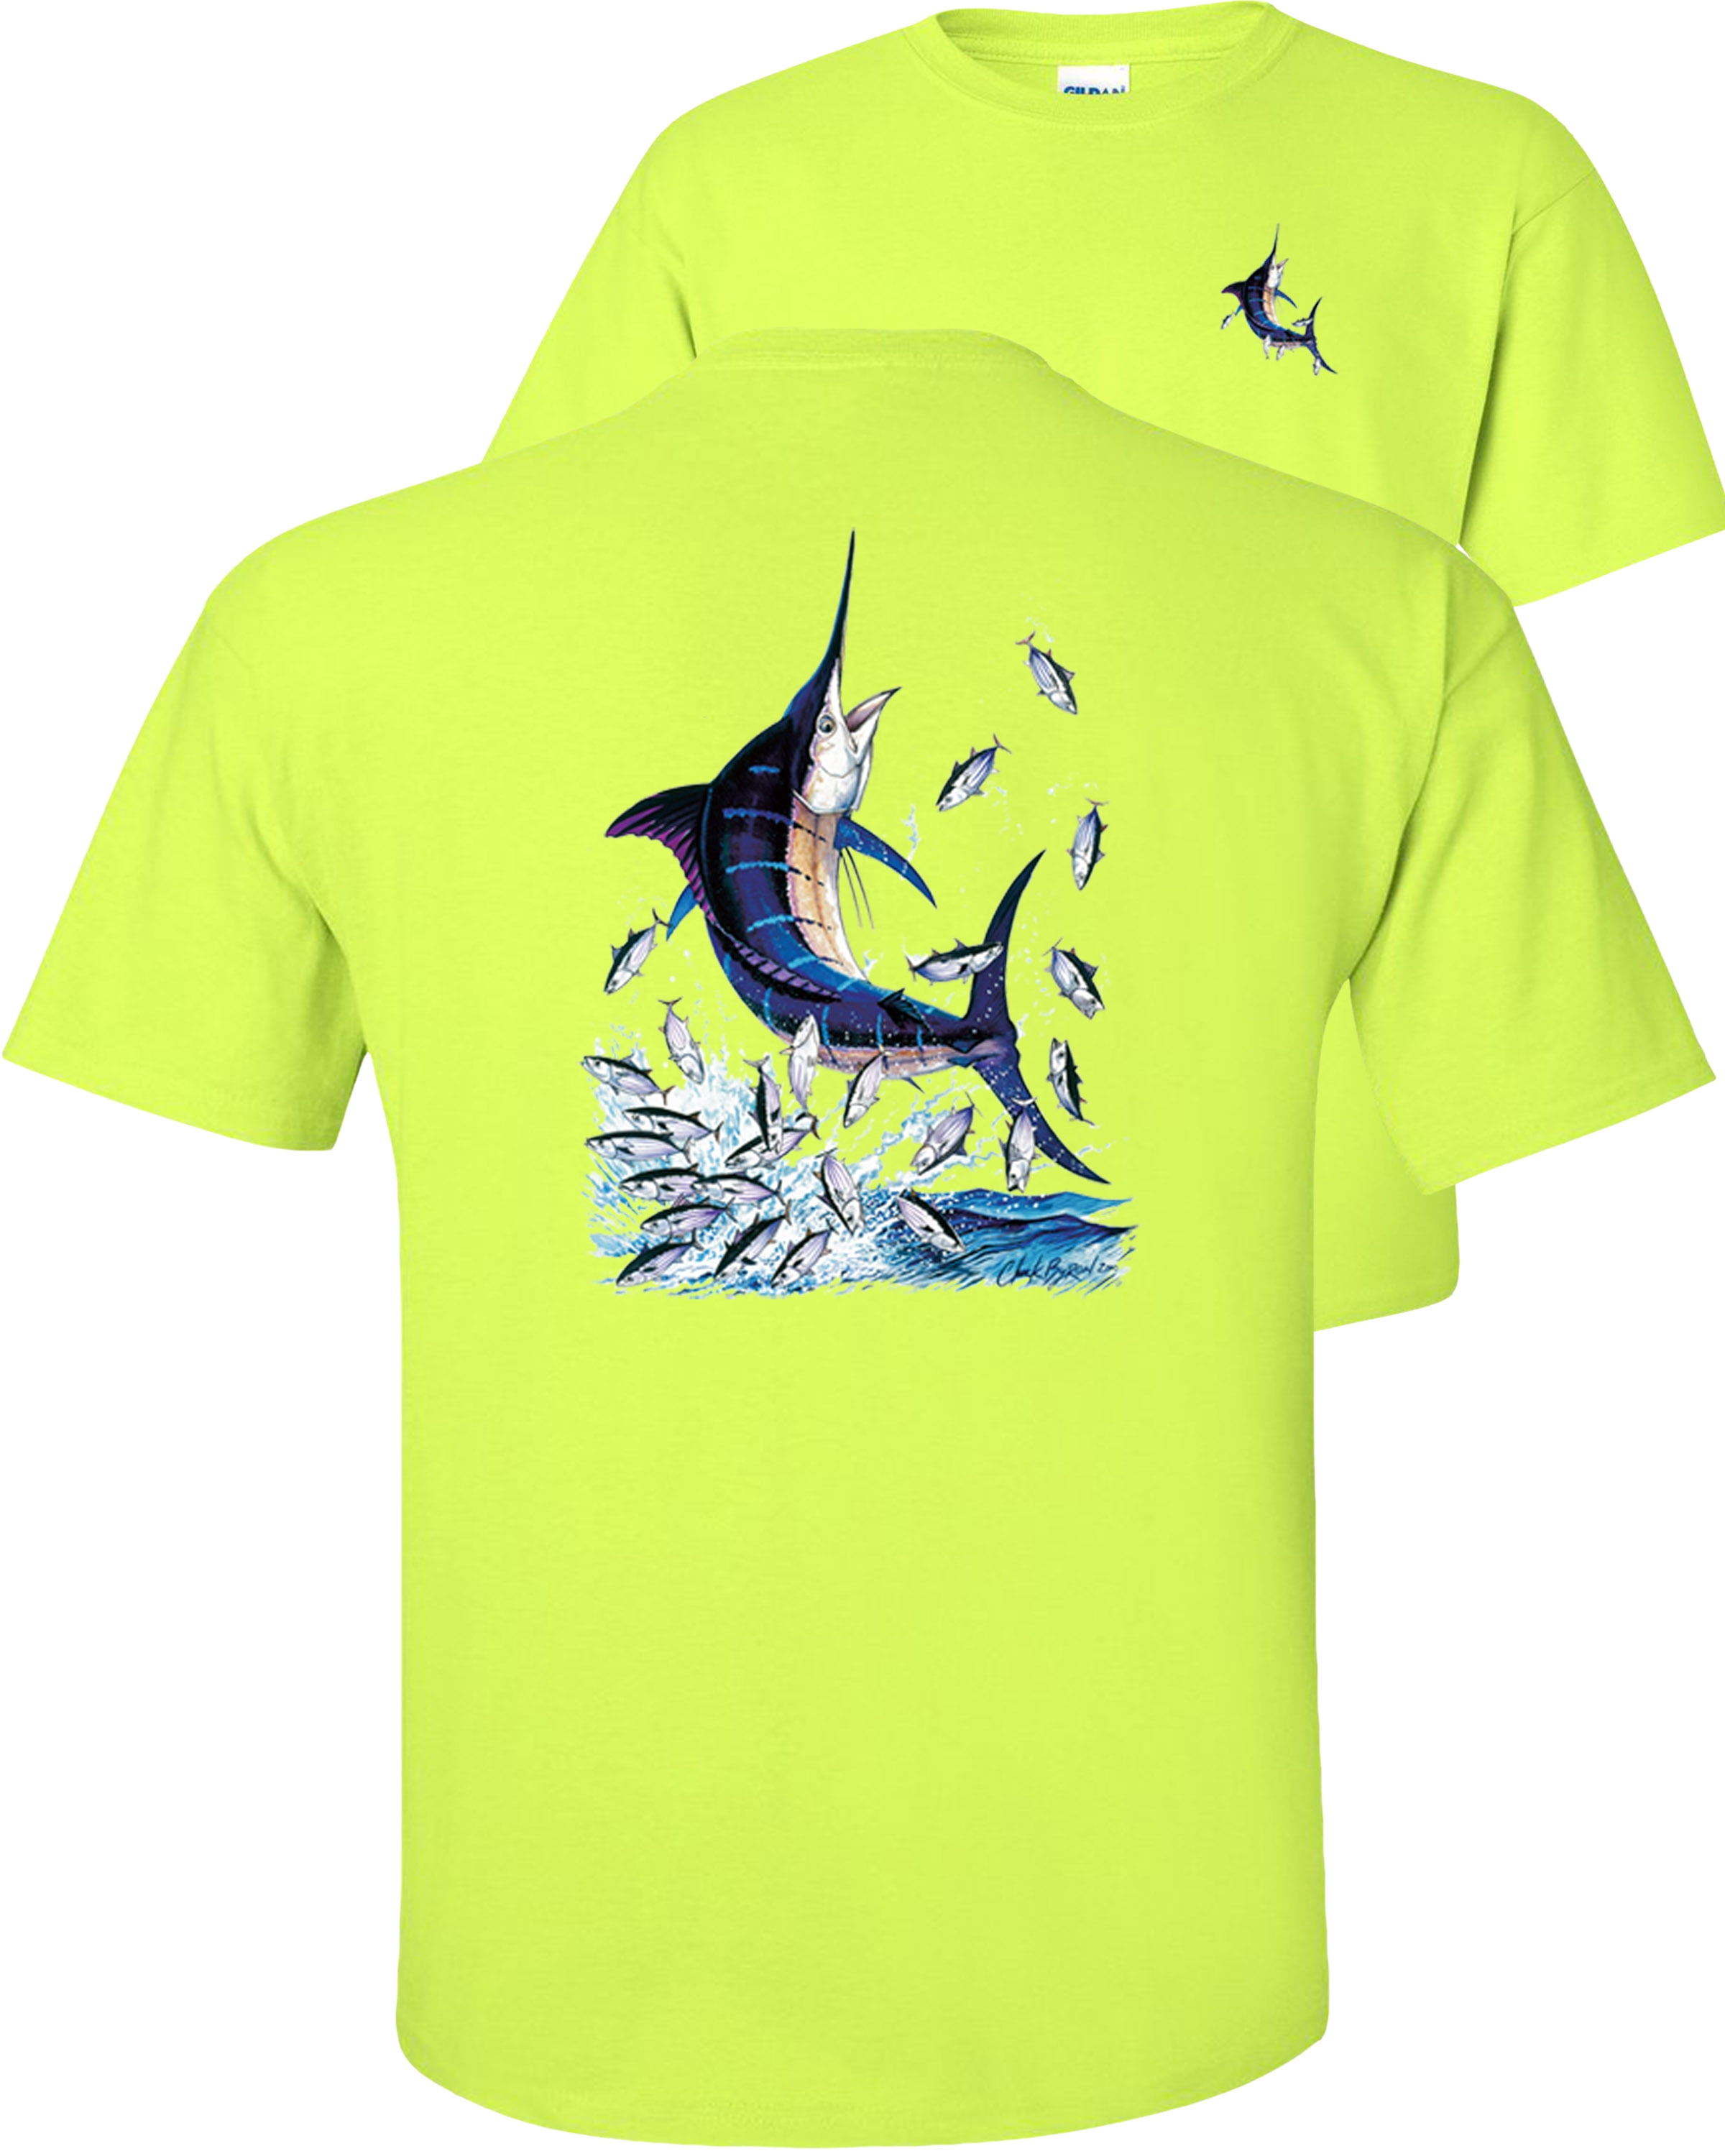 Fair Game Blue Marlin Fishing T-Shirt, Fishing Graphic Tee-Safety